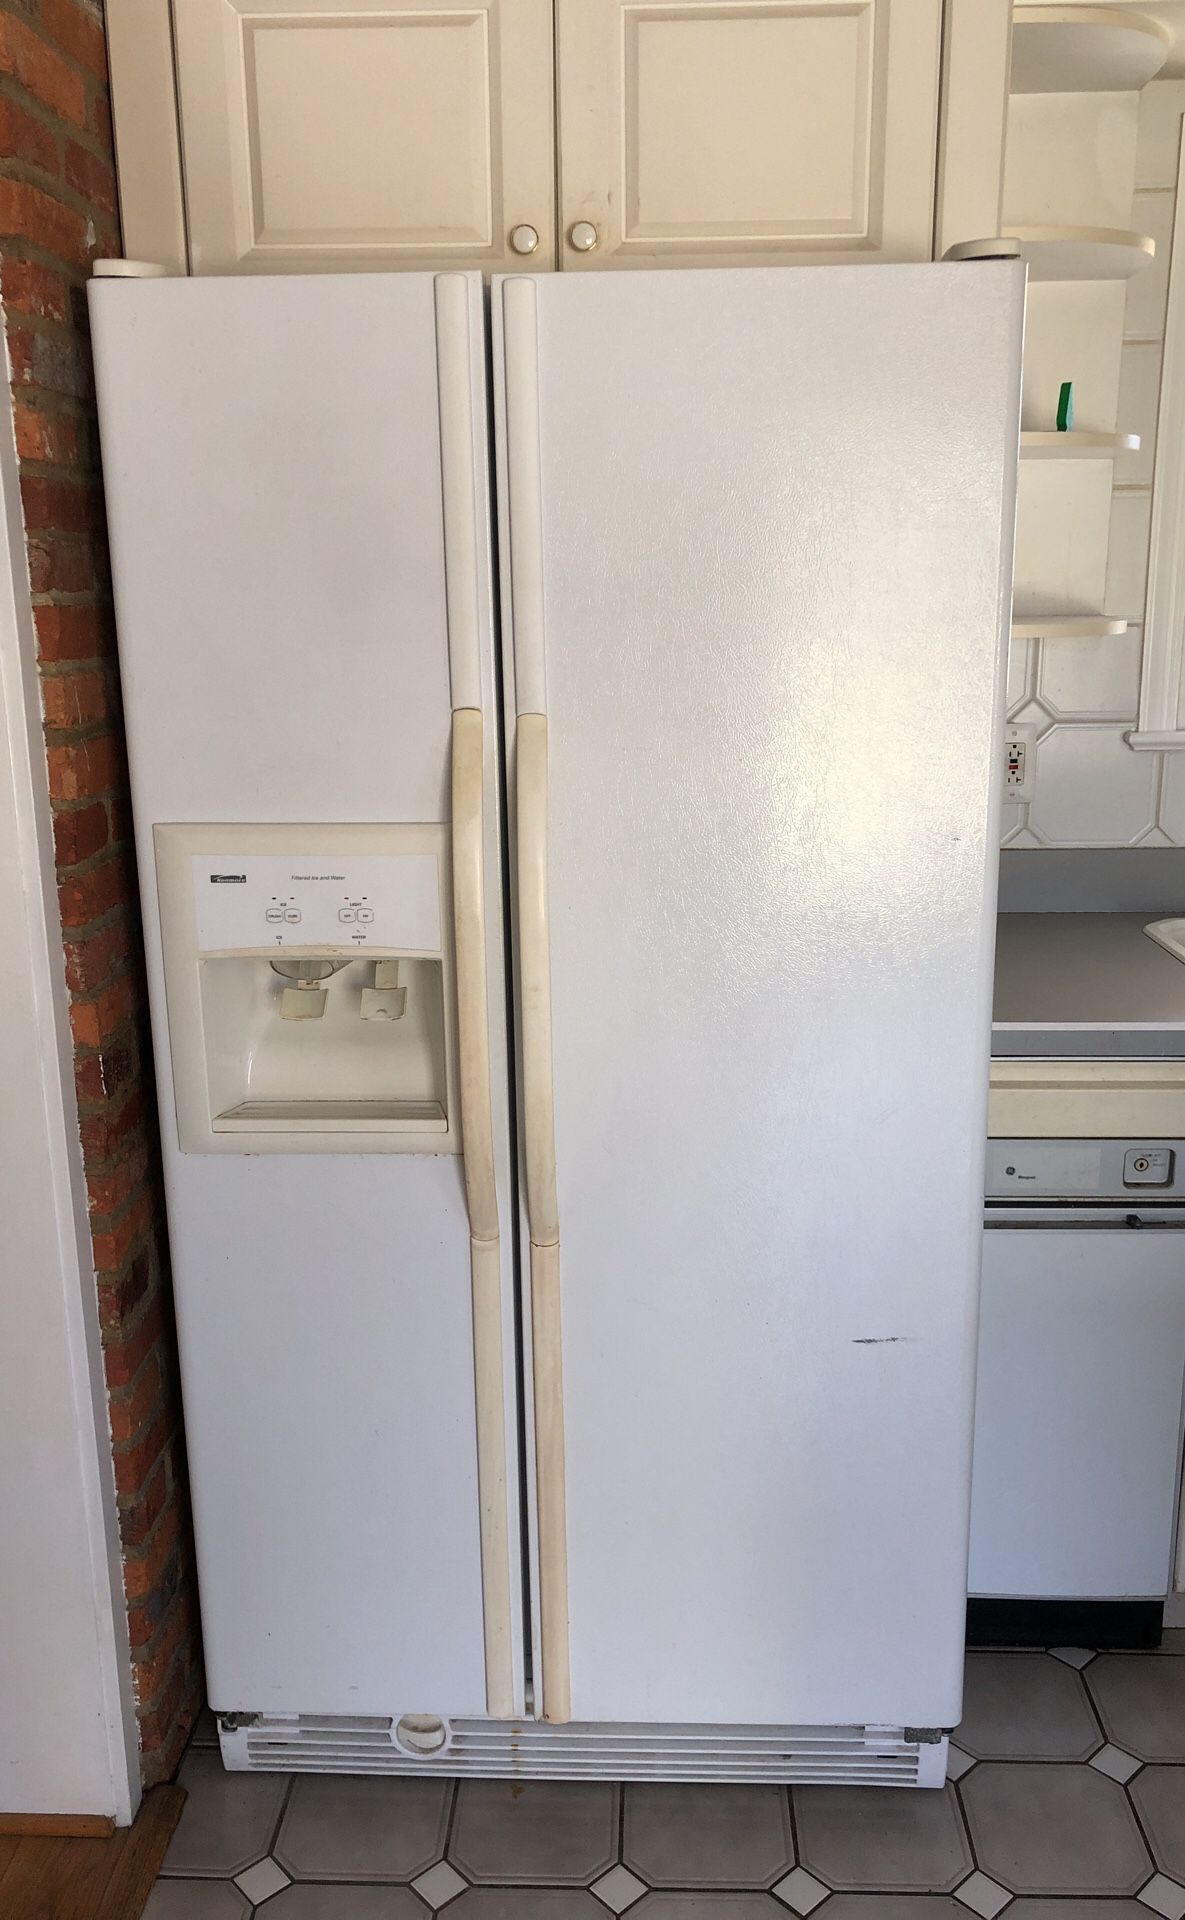 Kenmore Fridge Refrigerator (used but works)